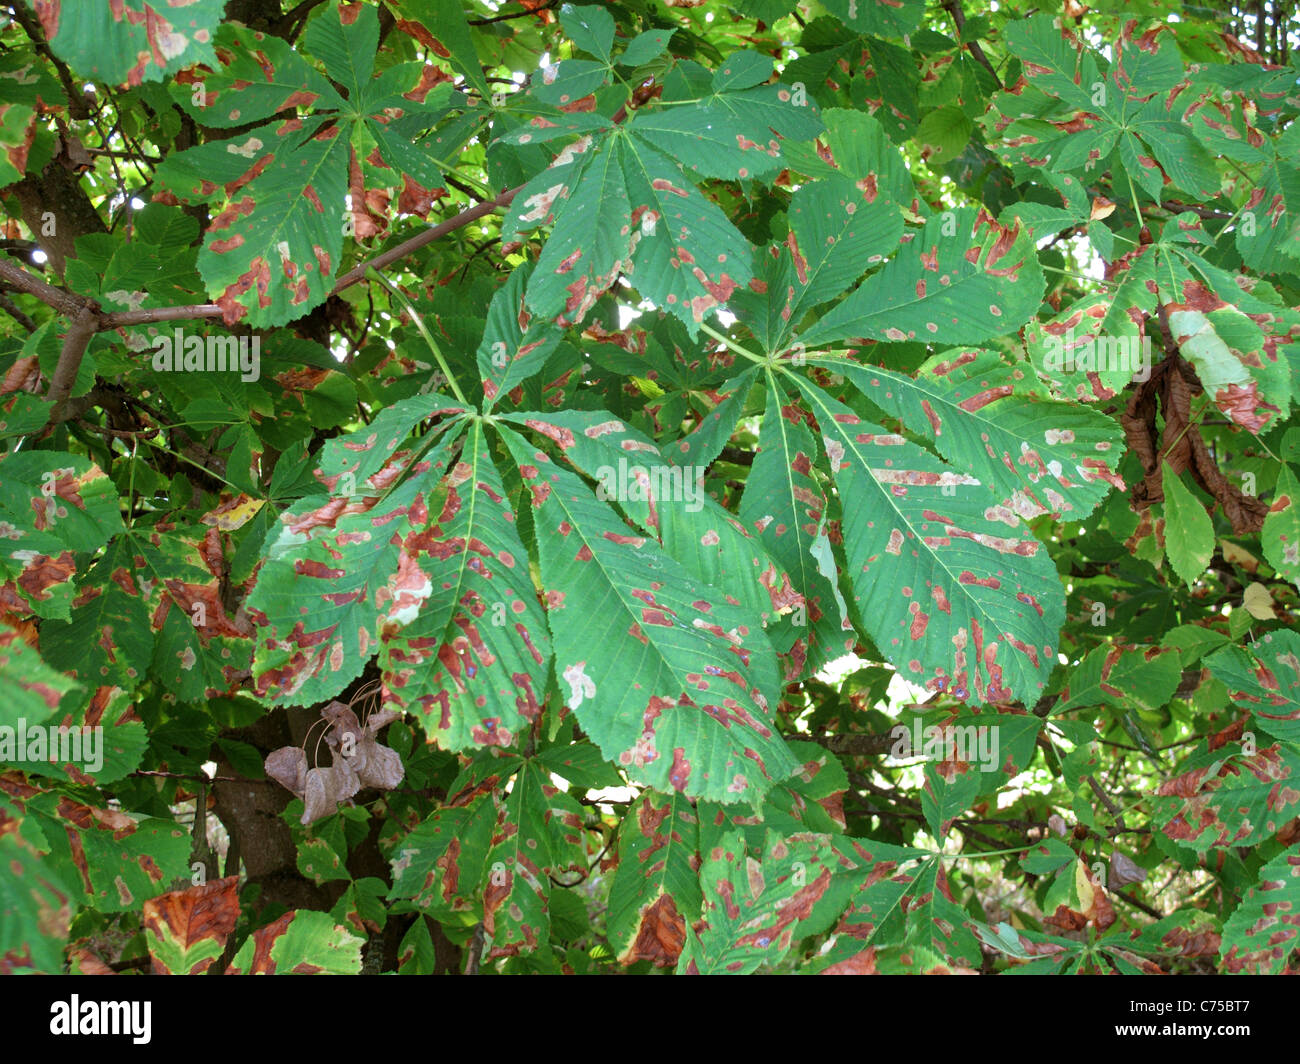 Damage to horse chestnut foliage caused by leafminer (Cameraria ohridella) larvae Stock Photo